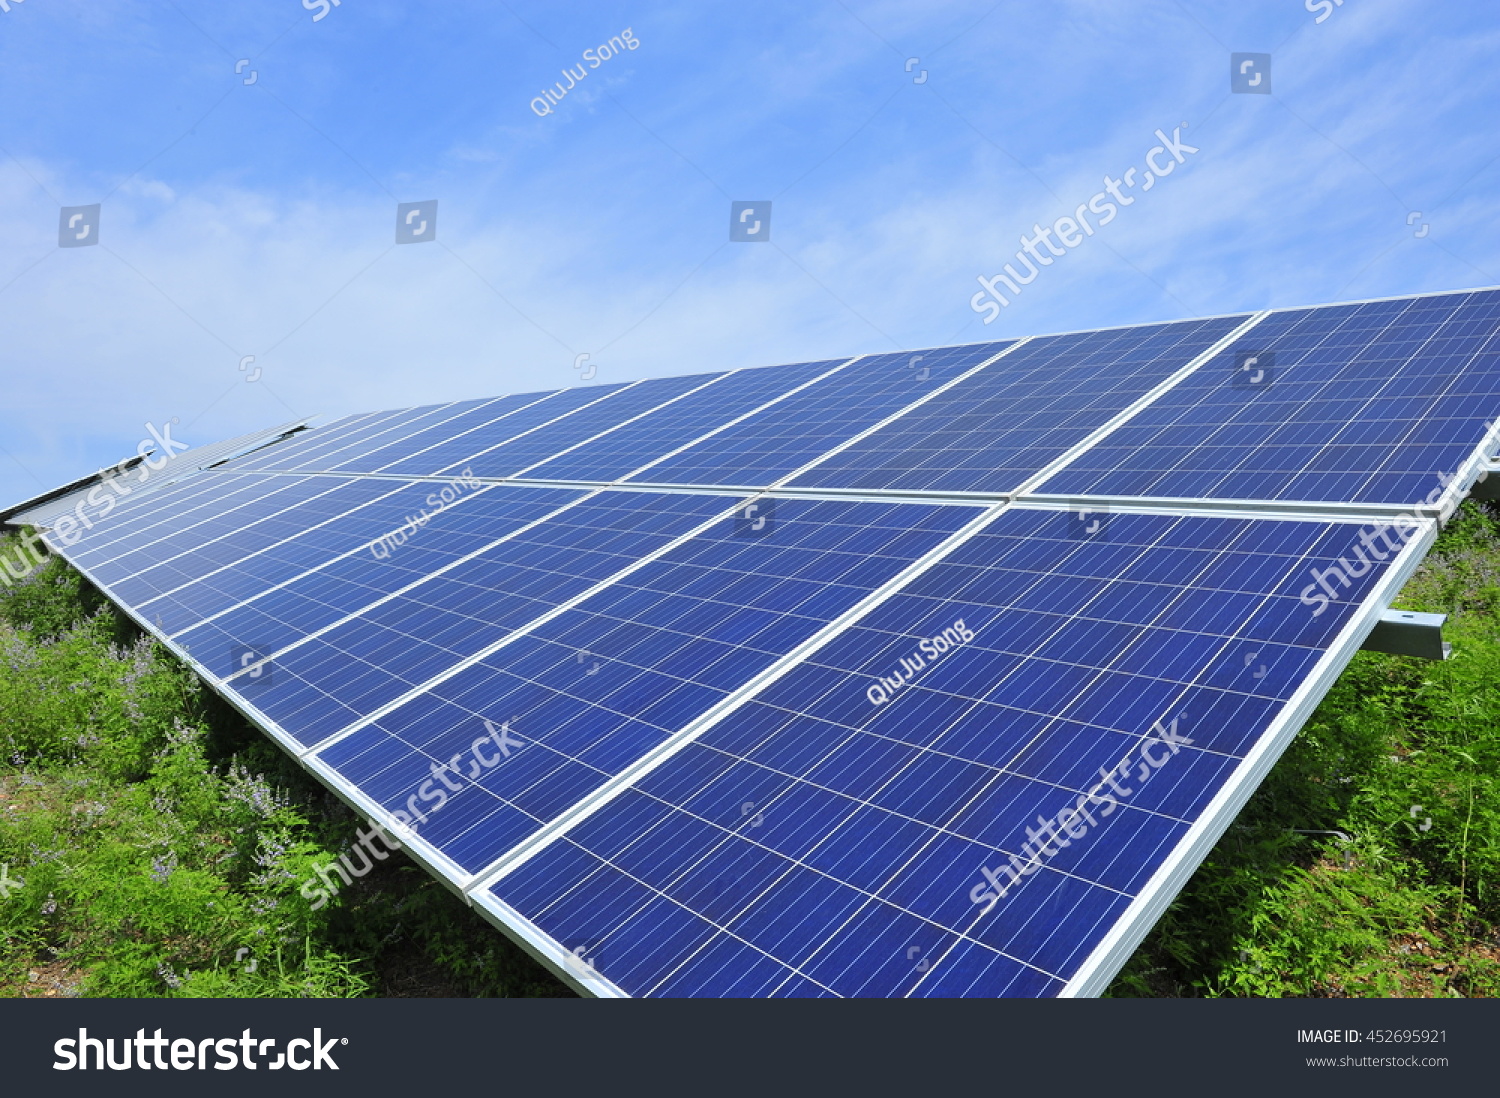 Solar Power Equipment Stock Photo 452695921 : Shutterstock